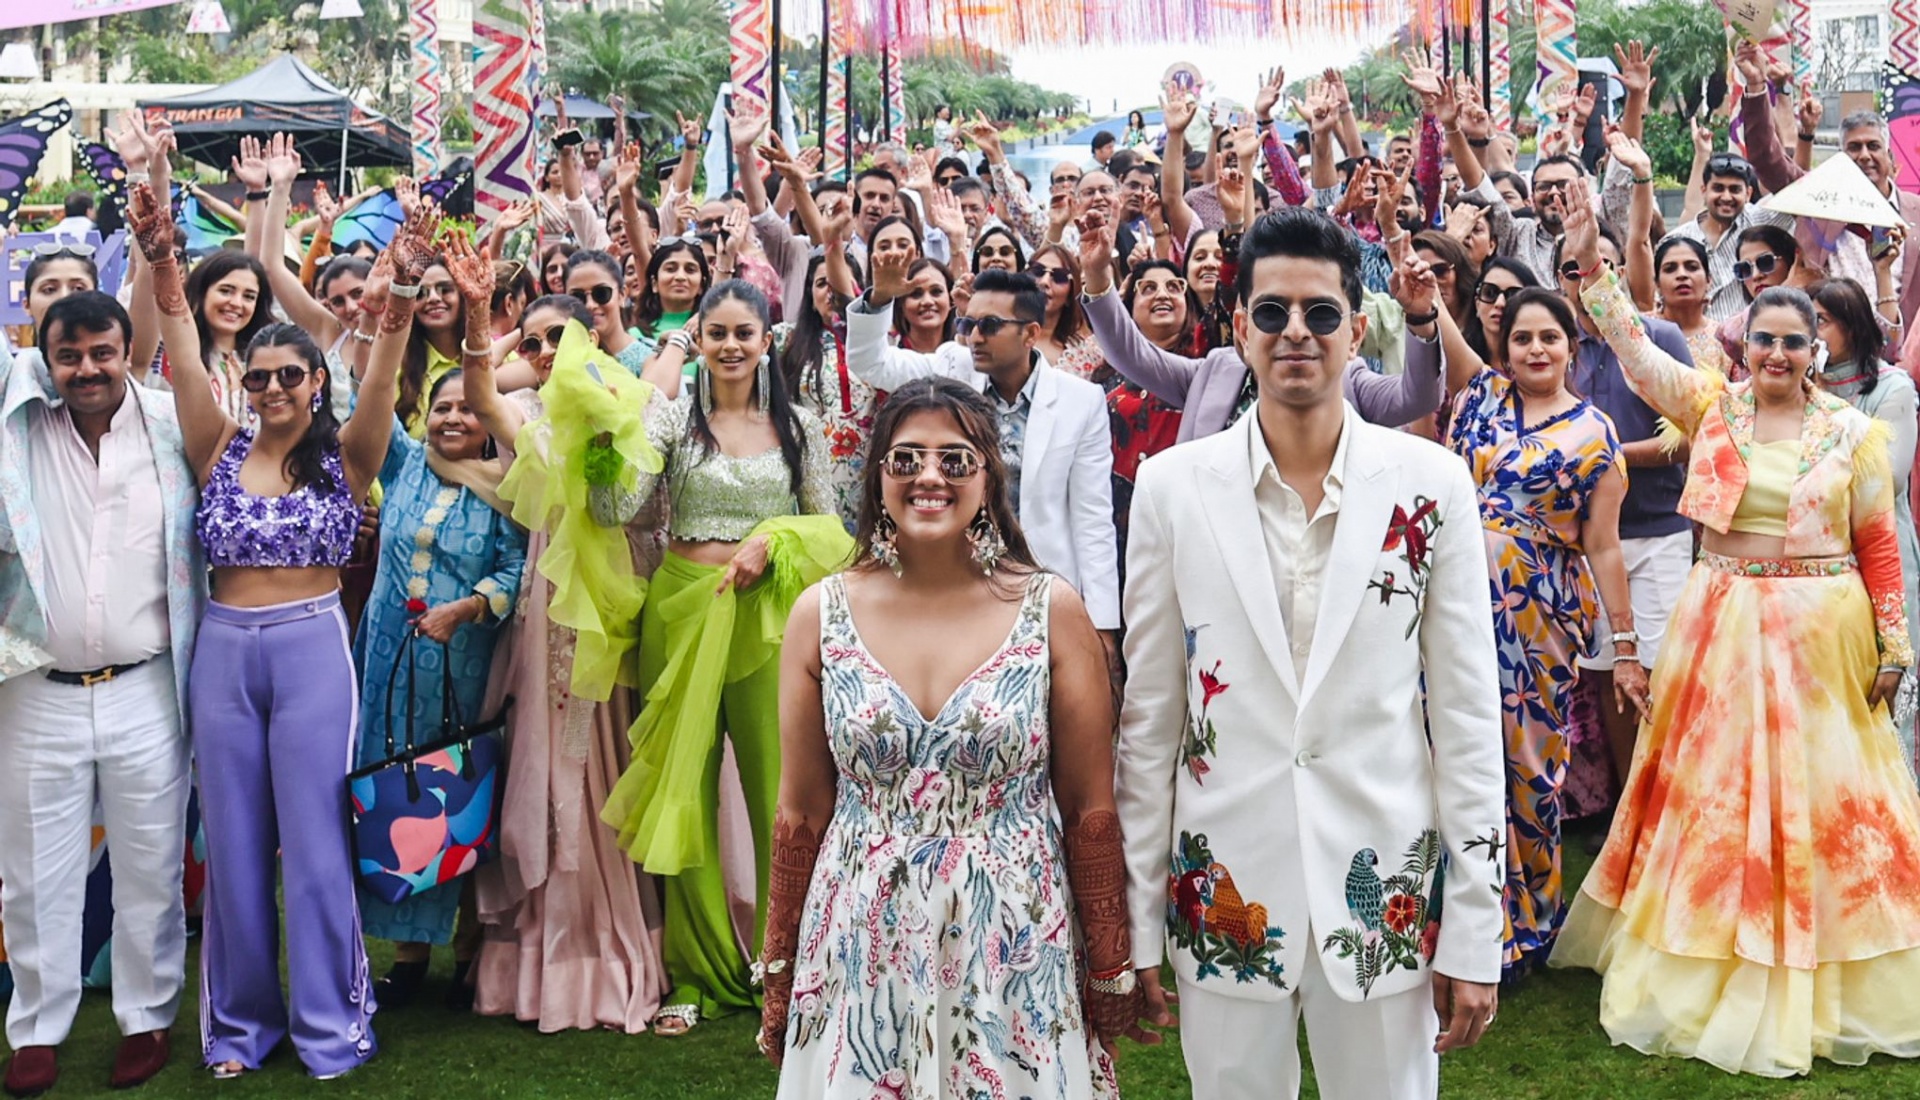 Lavish Indian weddings boost Vietnam’s tourism